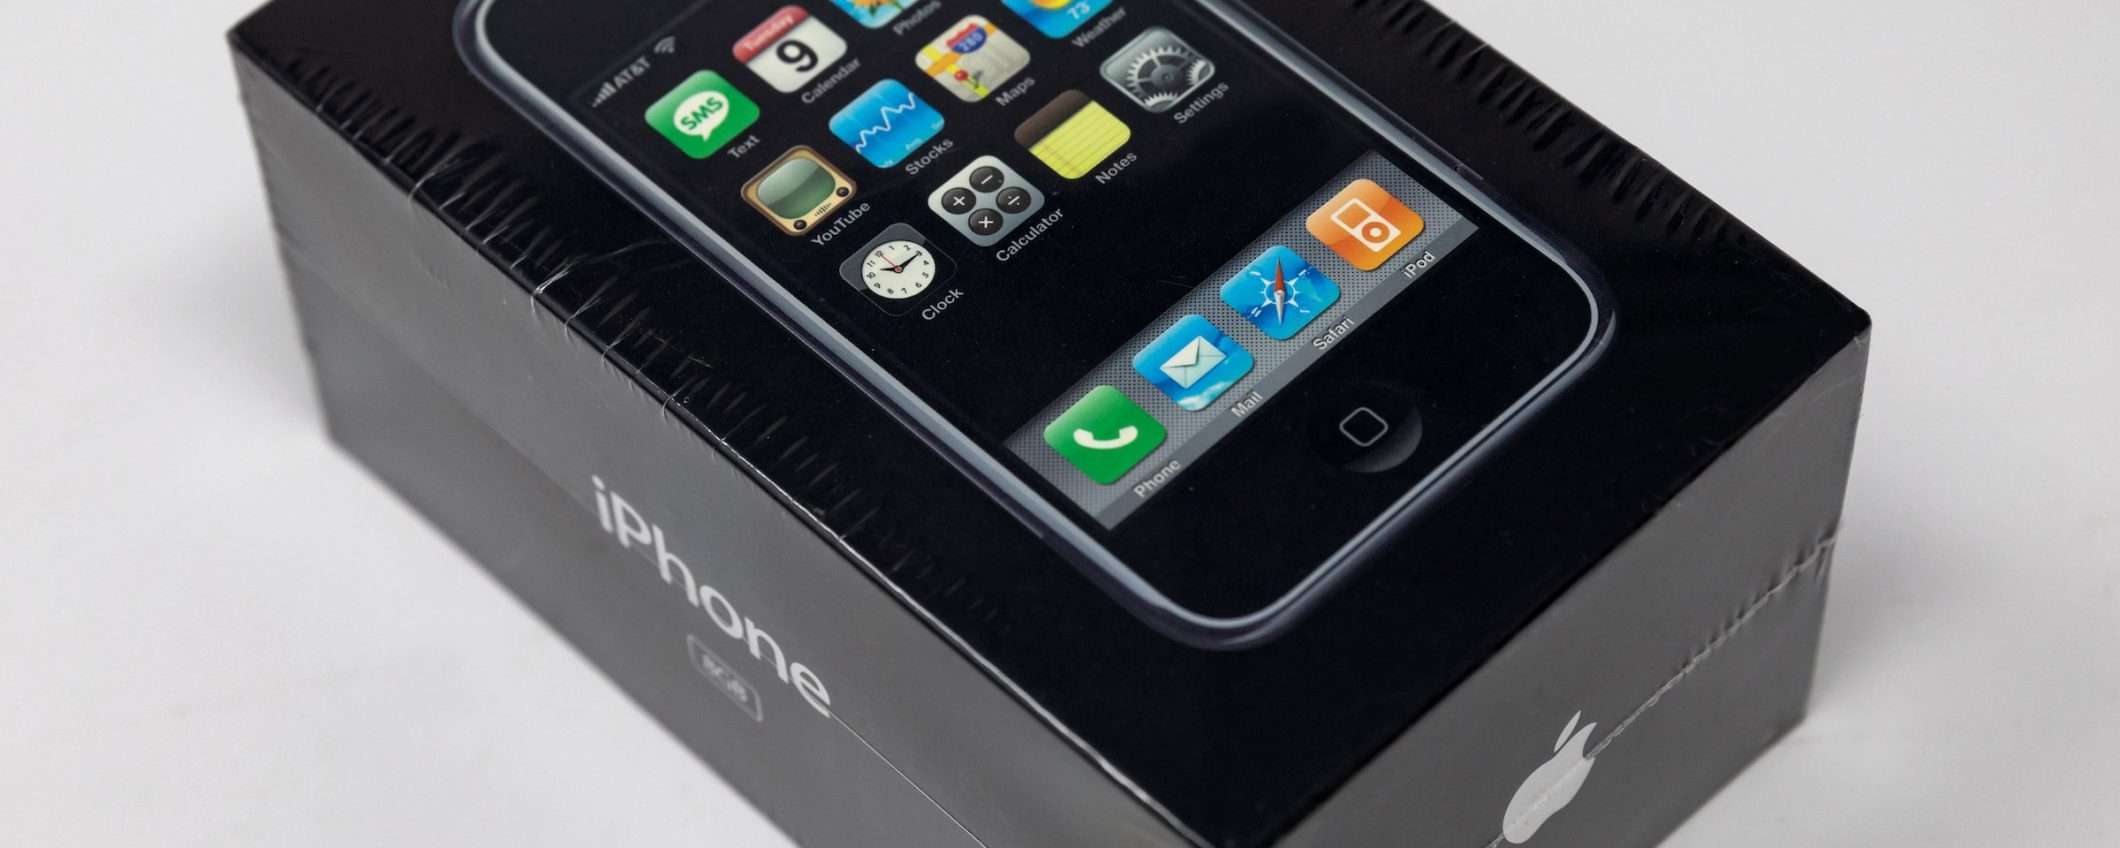 Un iPhone 2G è stato venduto all'asta per 40.000 dollari